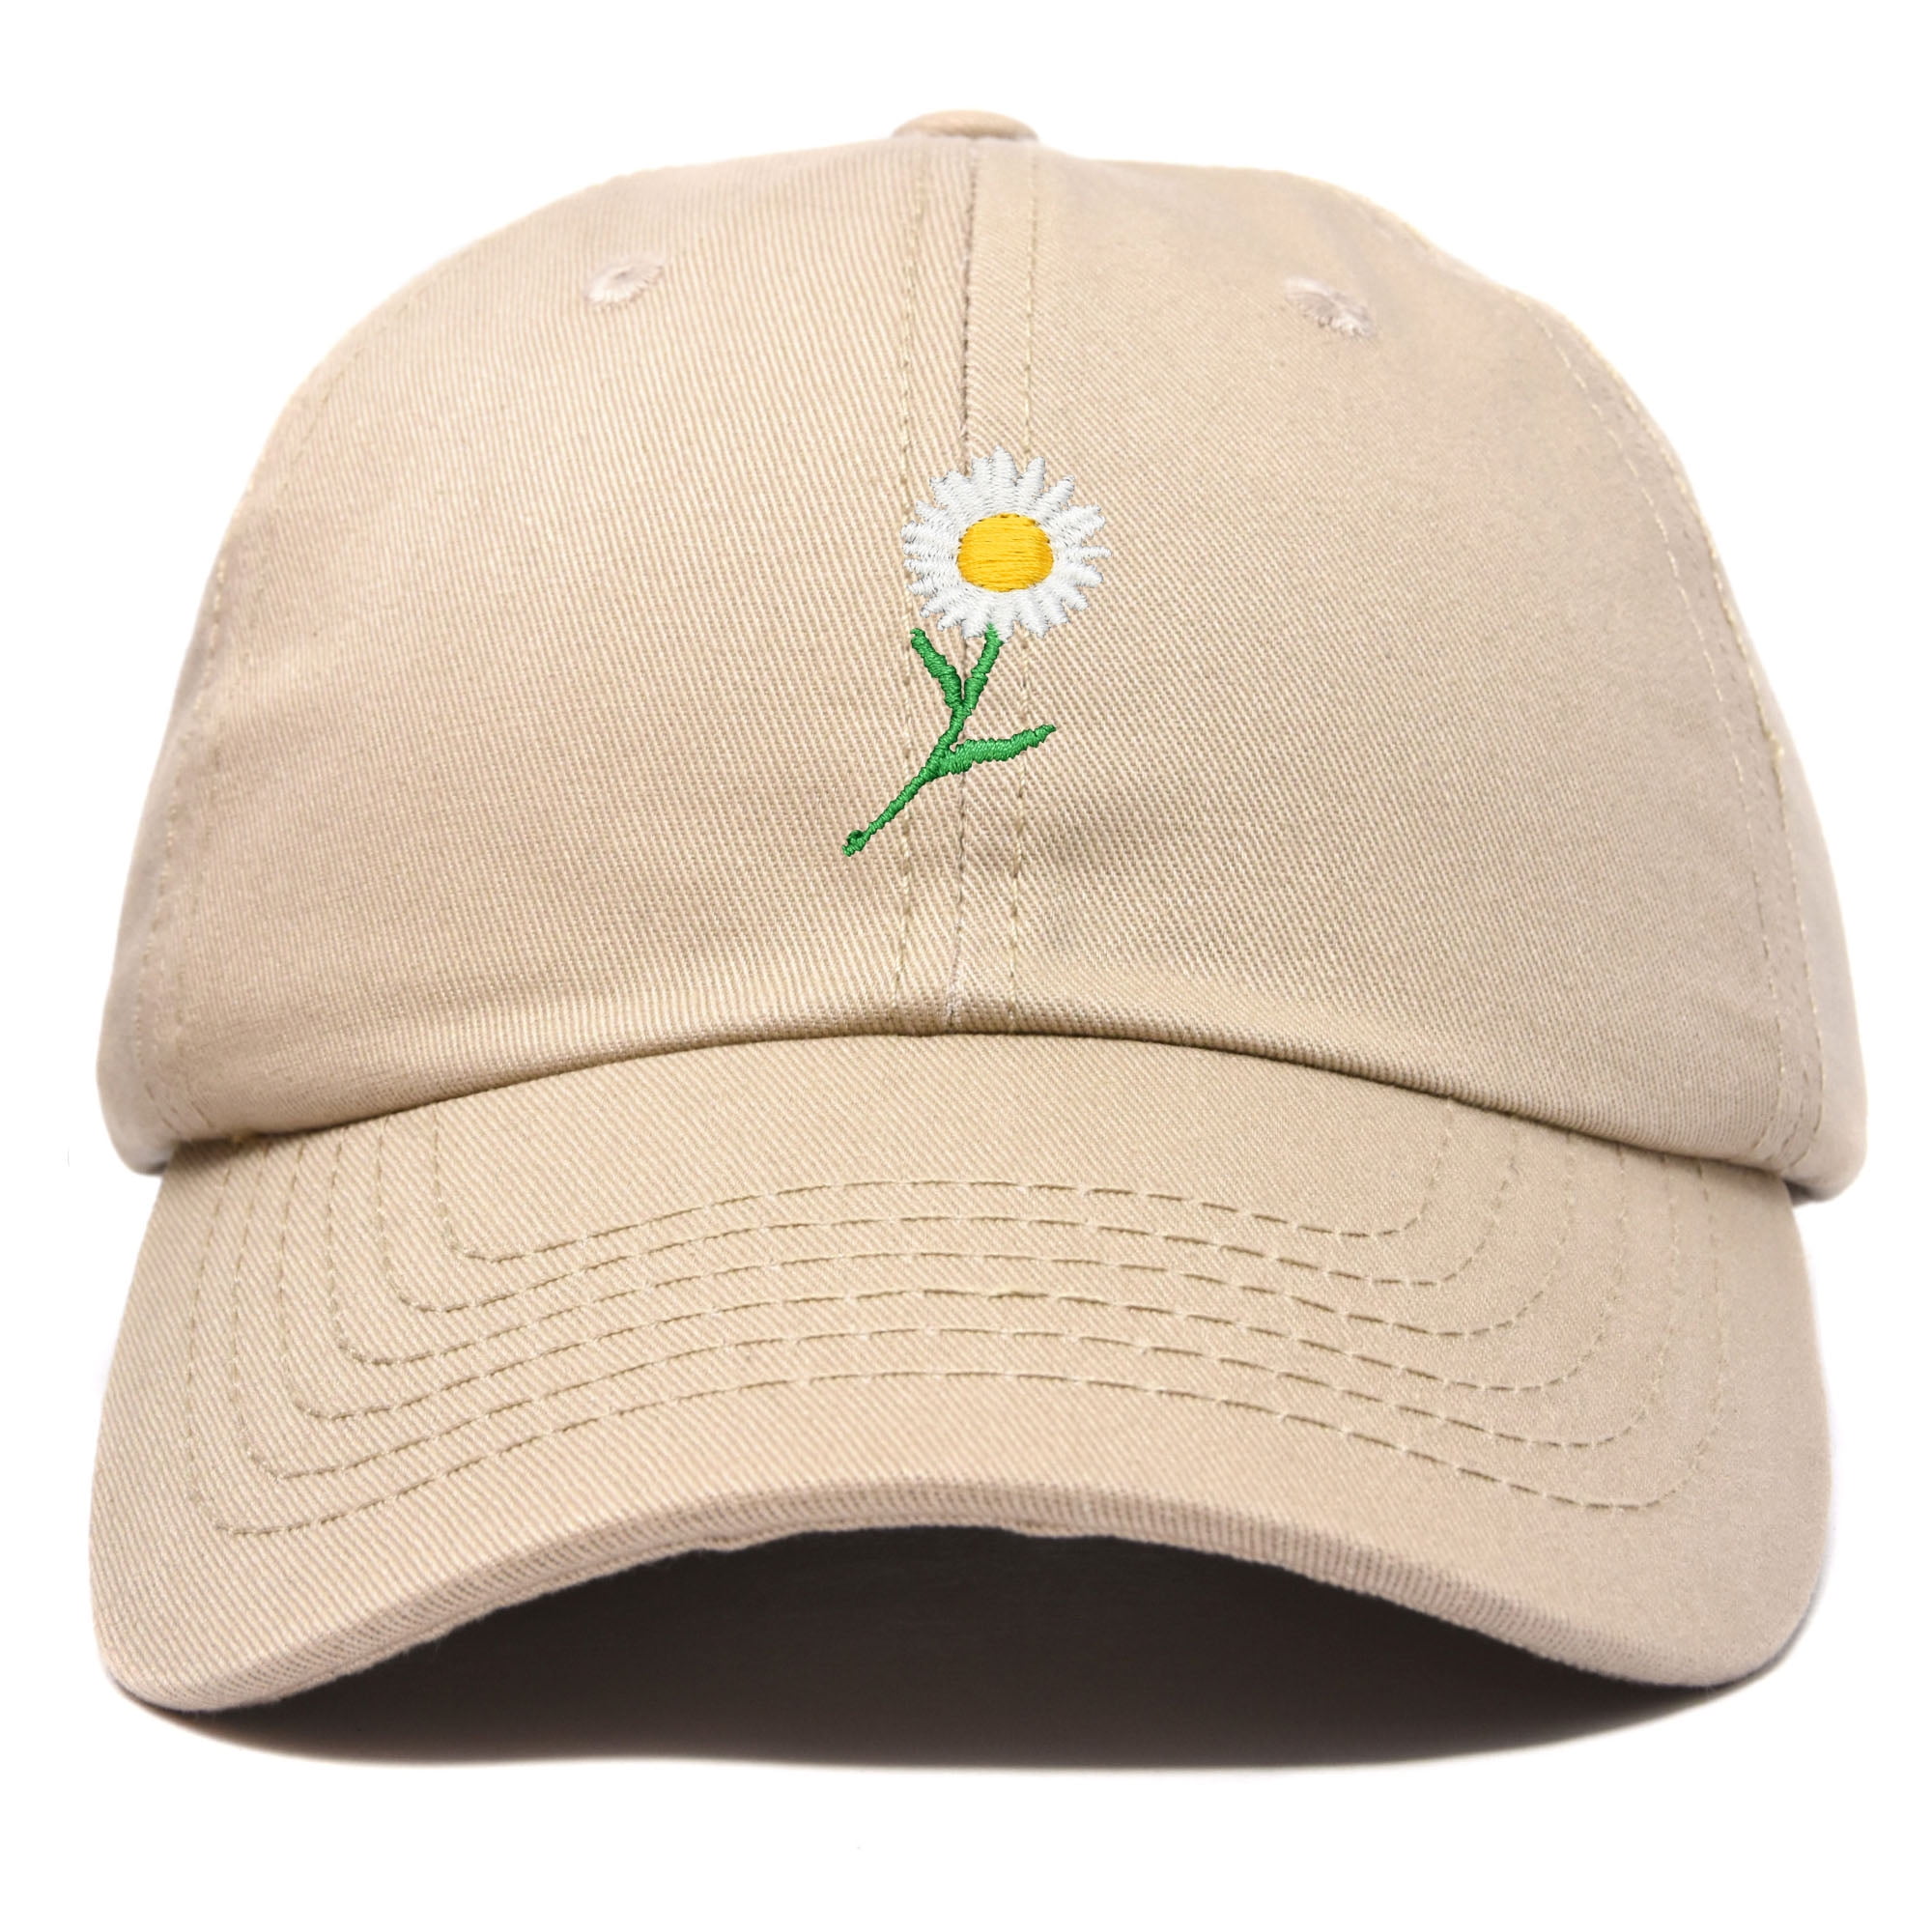 DALIX Daisy Flower Hat Womens Floral Baseball Cap in Khaki - Walmart.com